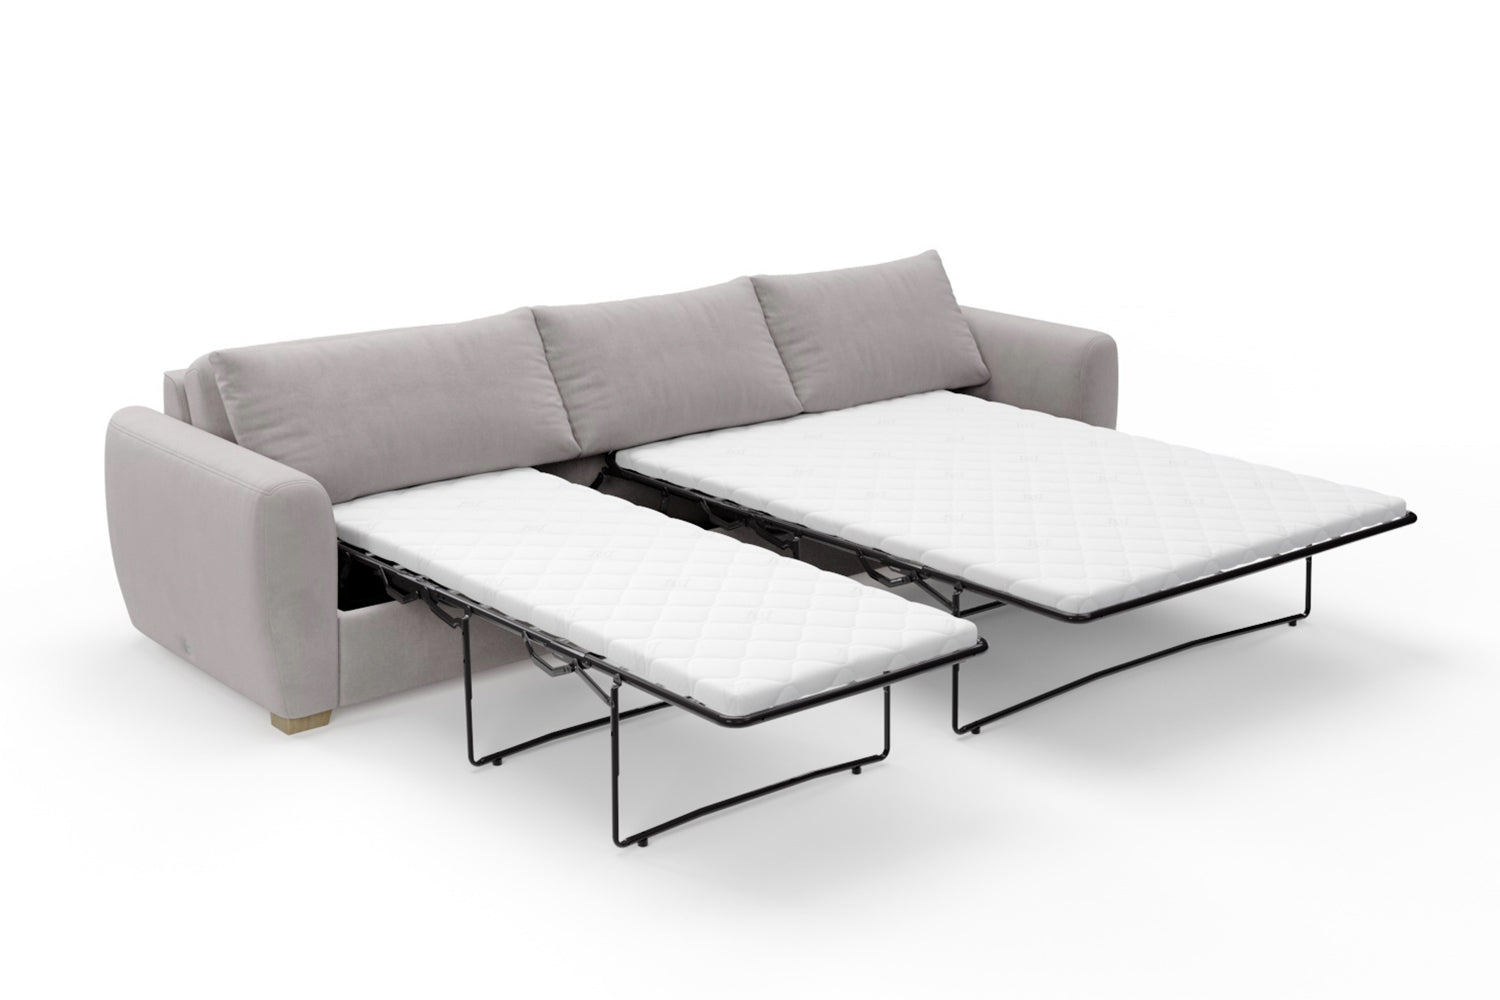 SNUG | The Cloud Sundae 4.5 Seater Sofa Bed in Warm Grey